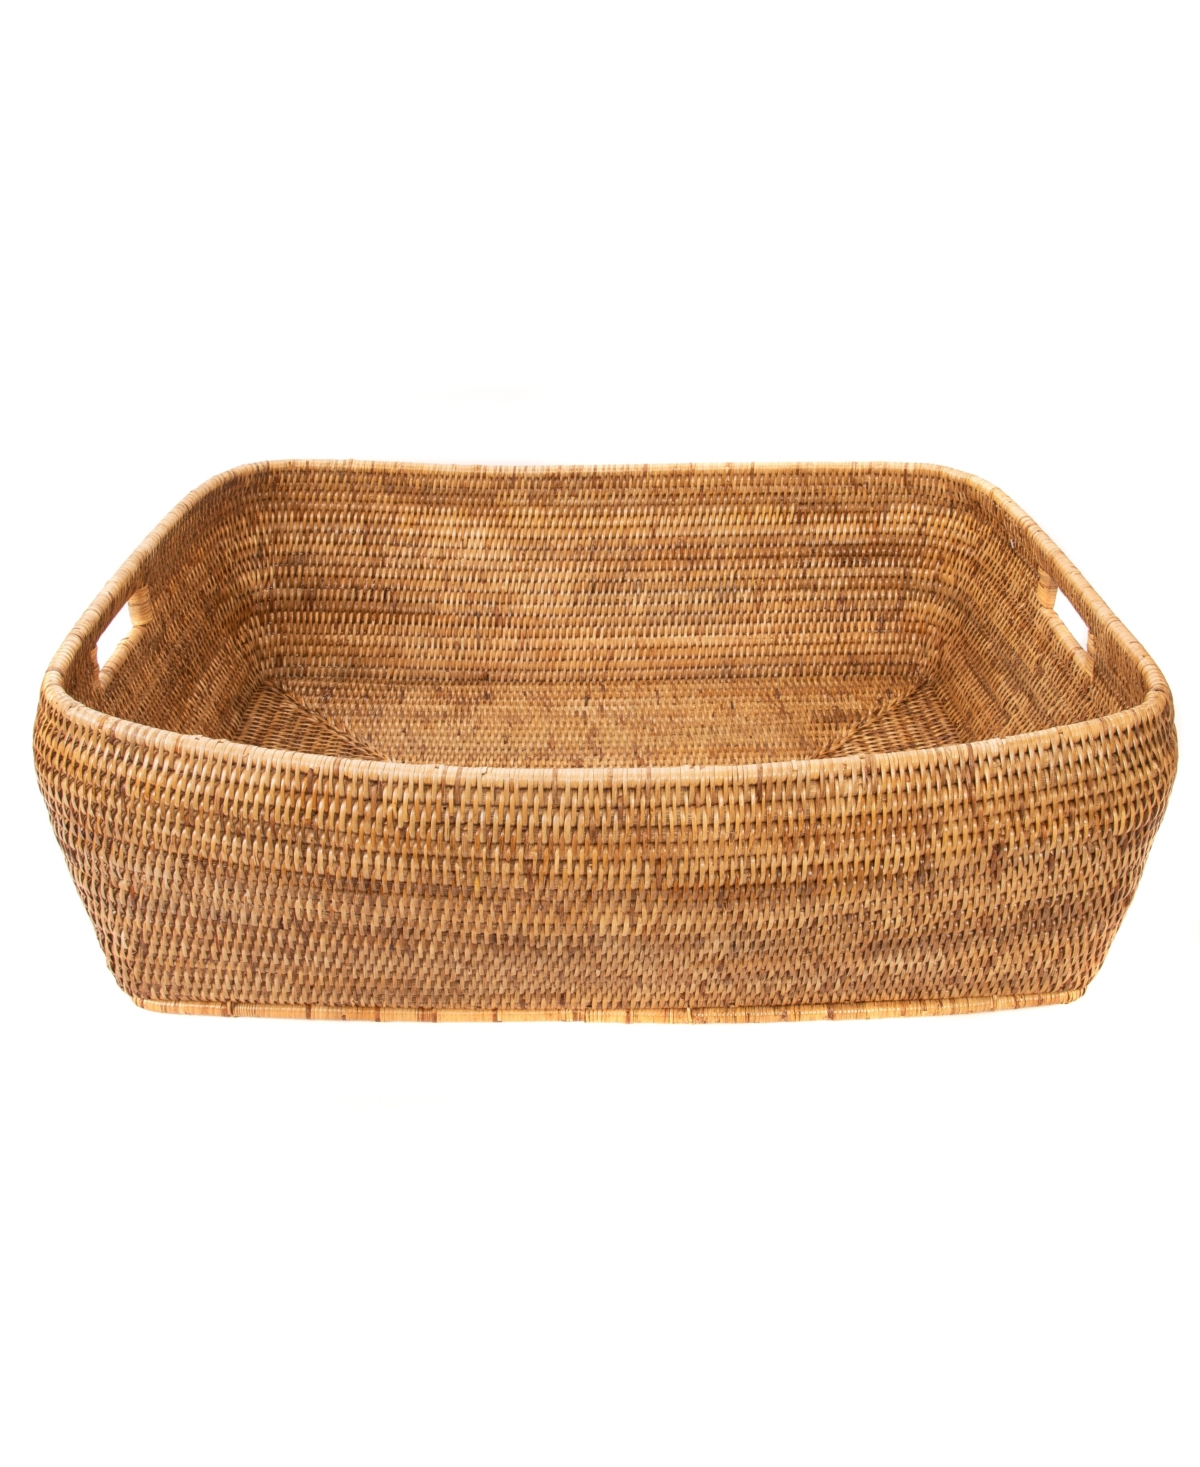 Shop Artifacts Trading Company Artifacts Rattan Rectangular Storage Basket In Honey Brown